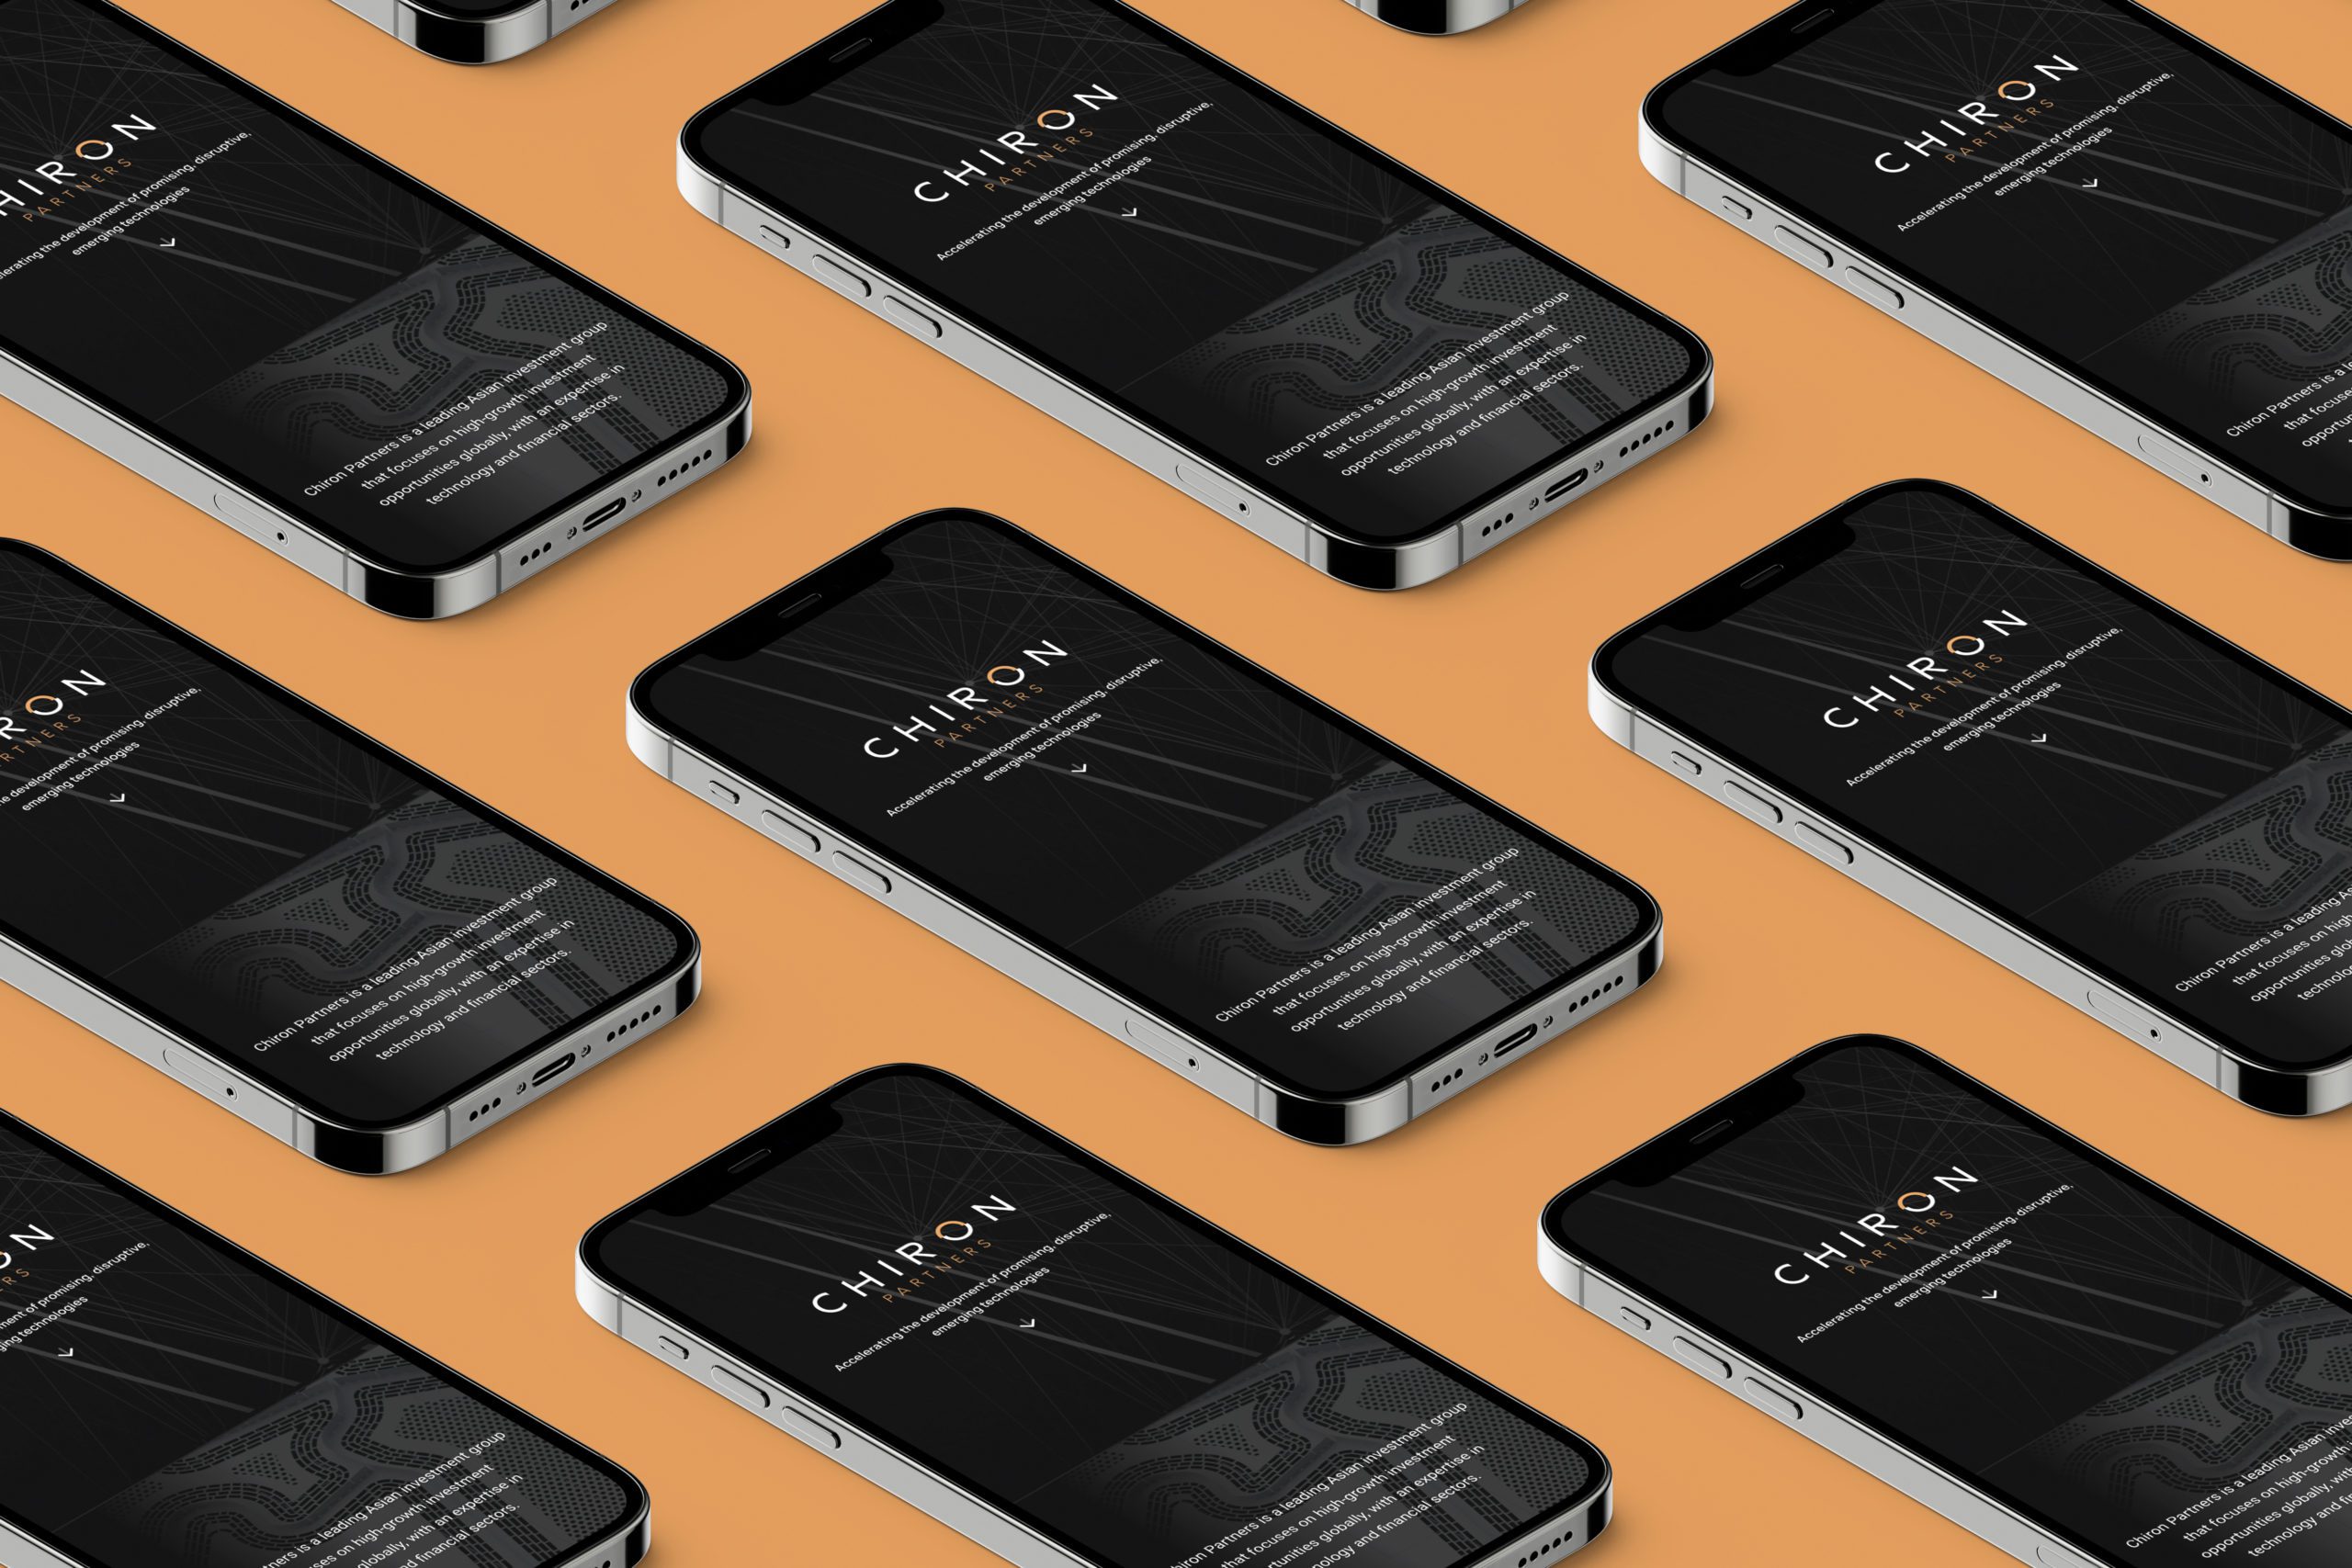 Chiron Partners web design phone multi screen with orange background